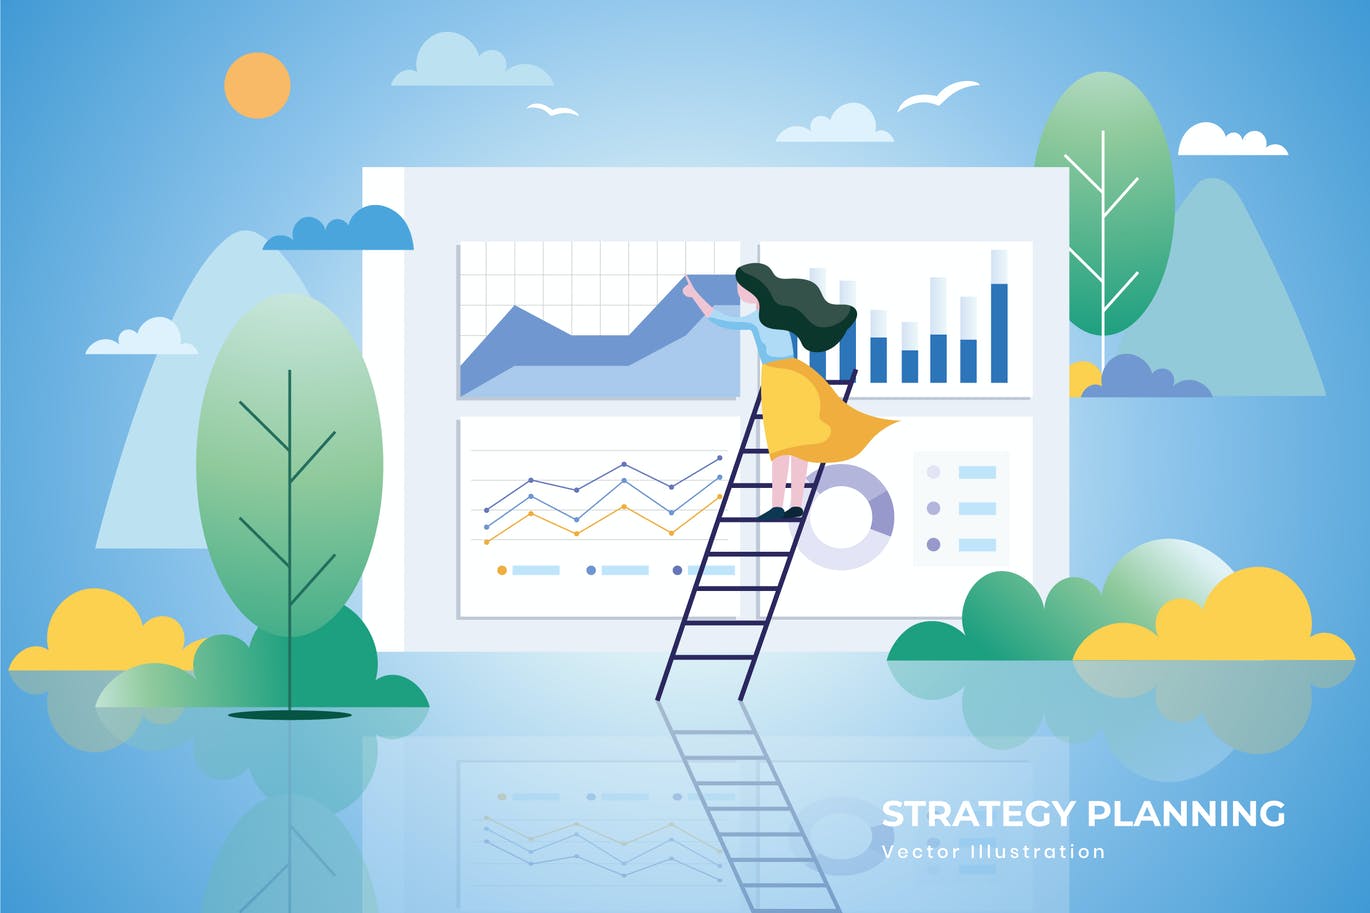 Strategy planning vector illustration